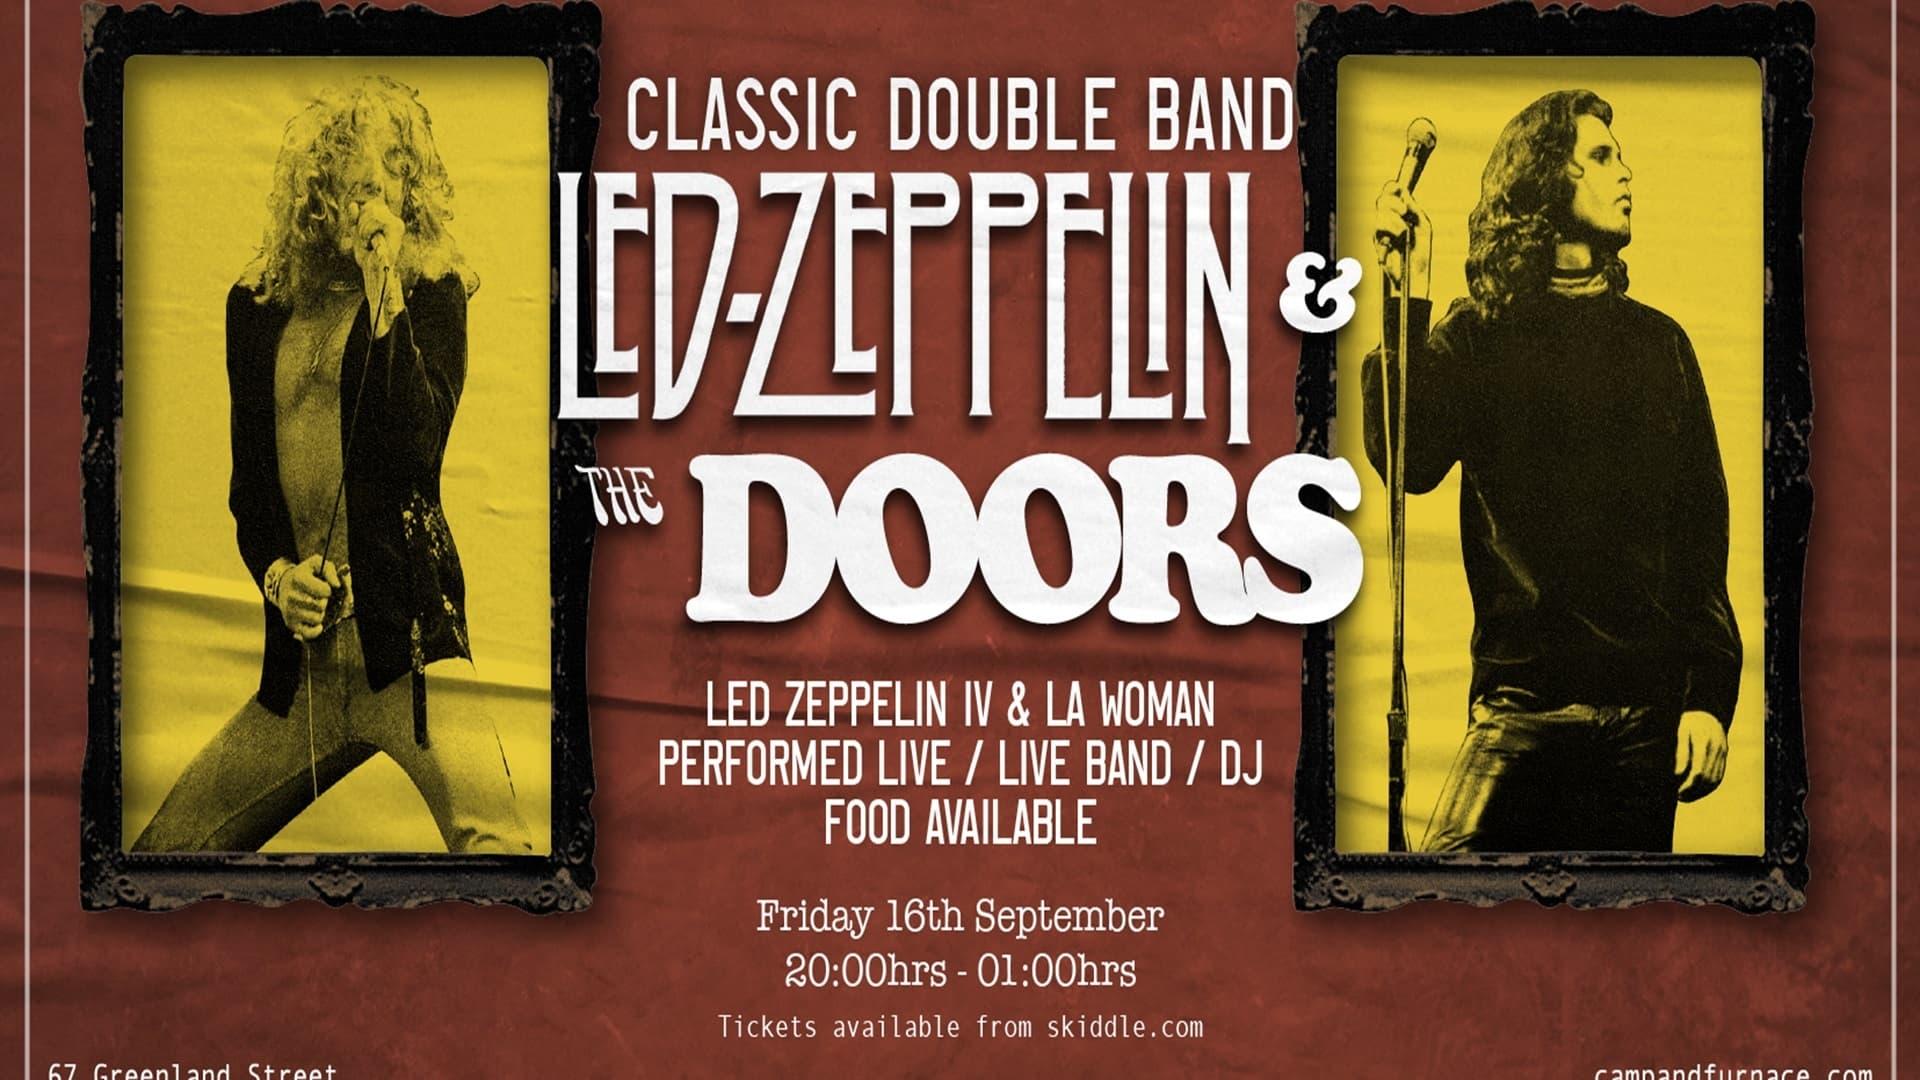 The Doors vs Led Zeppelin backdrop